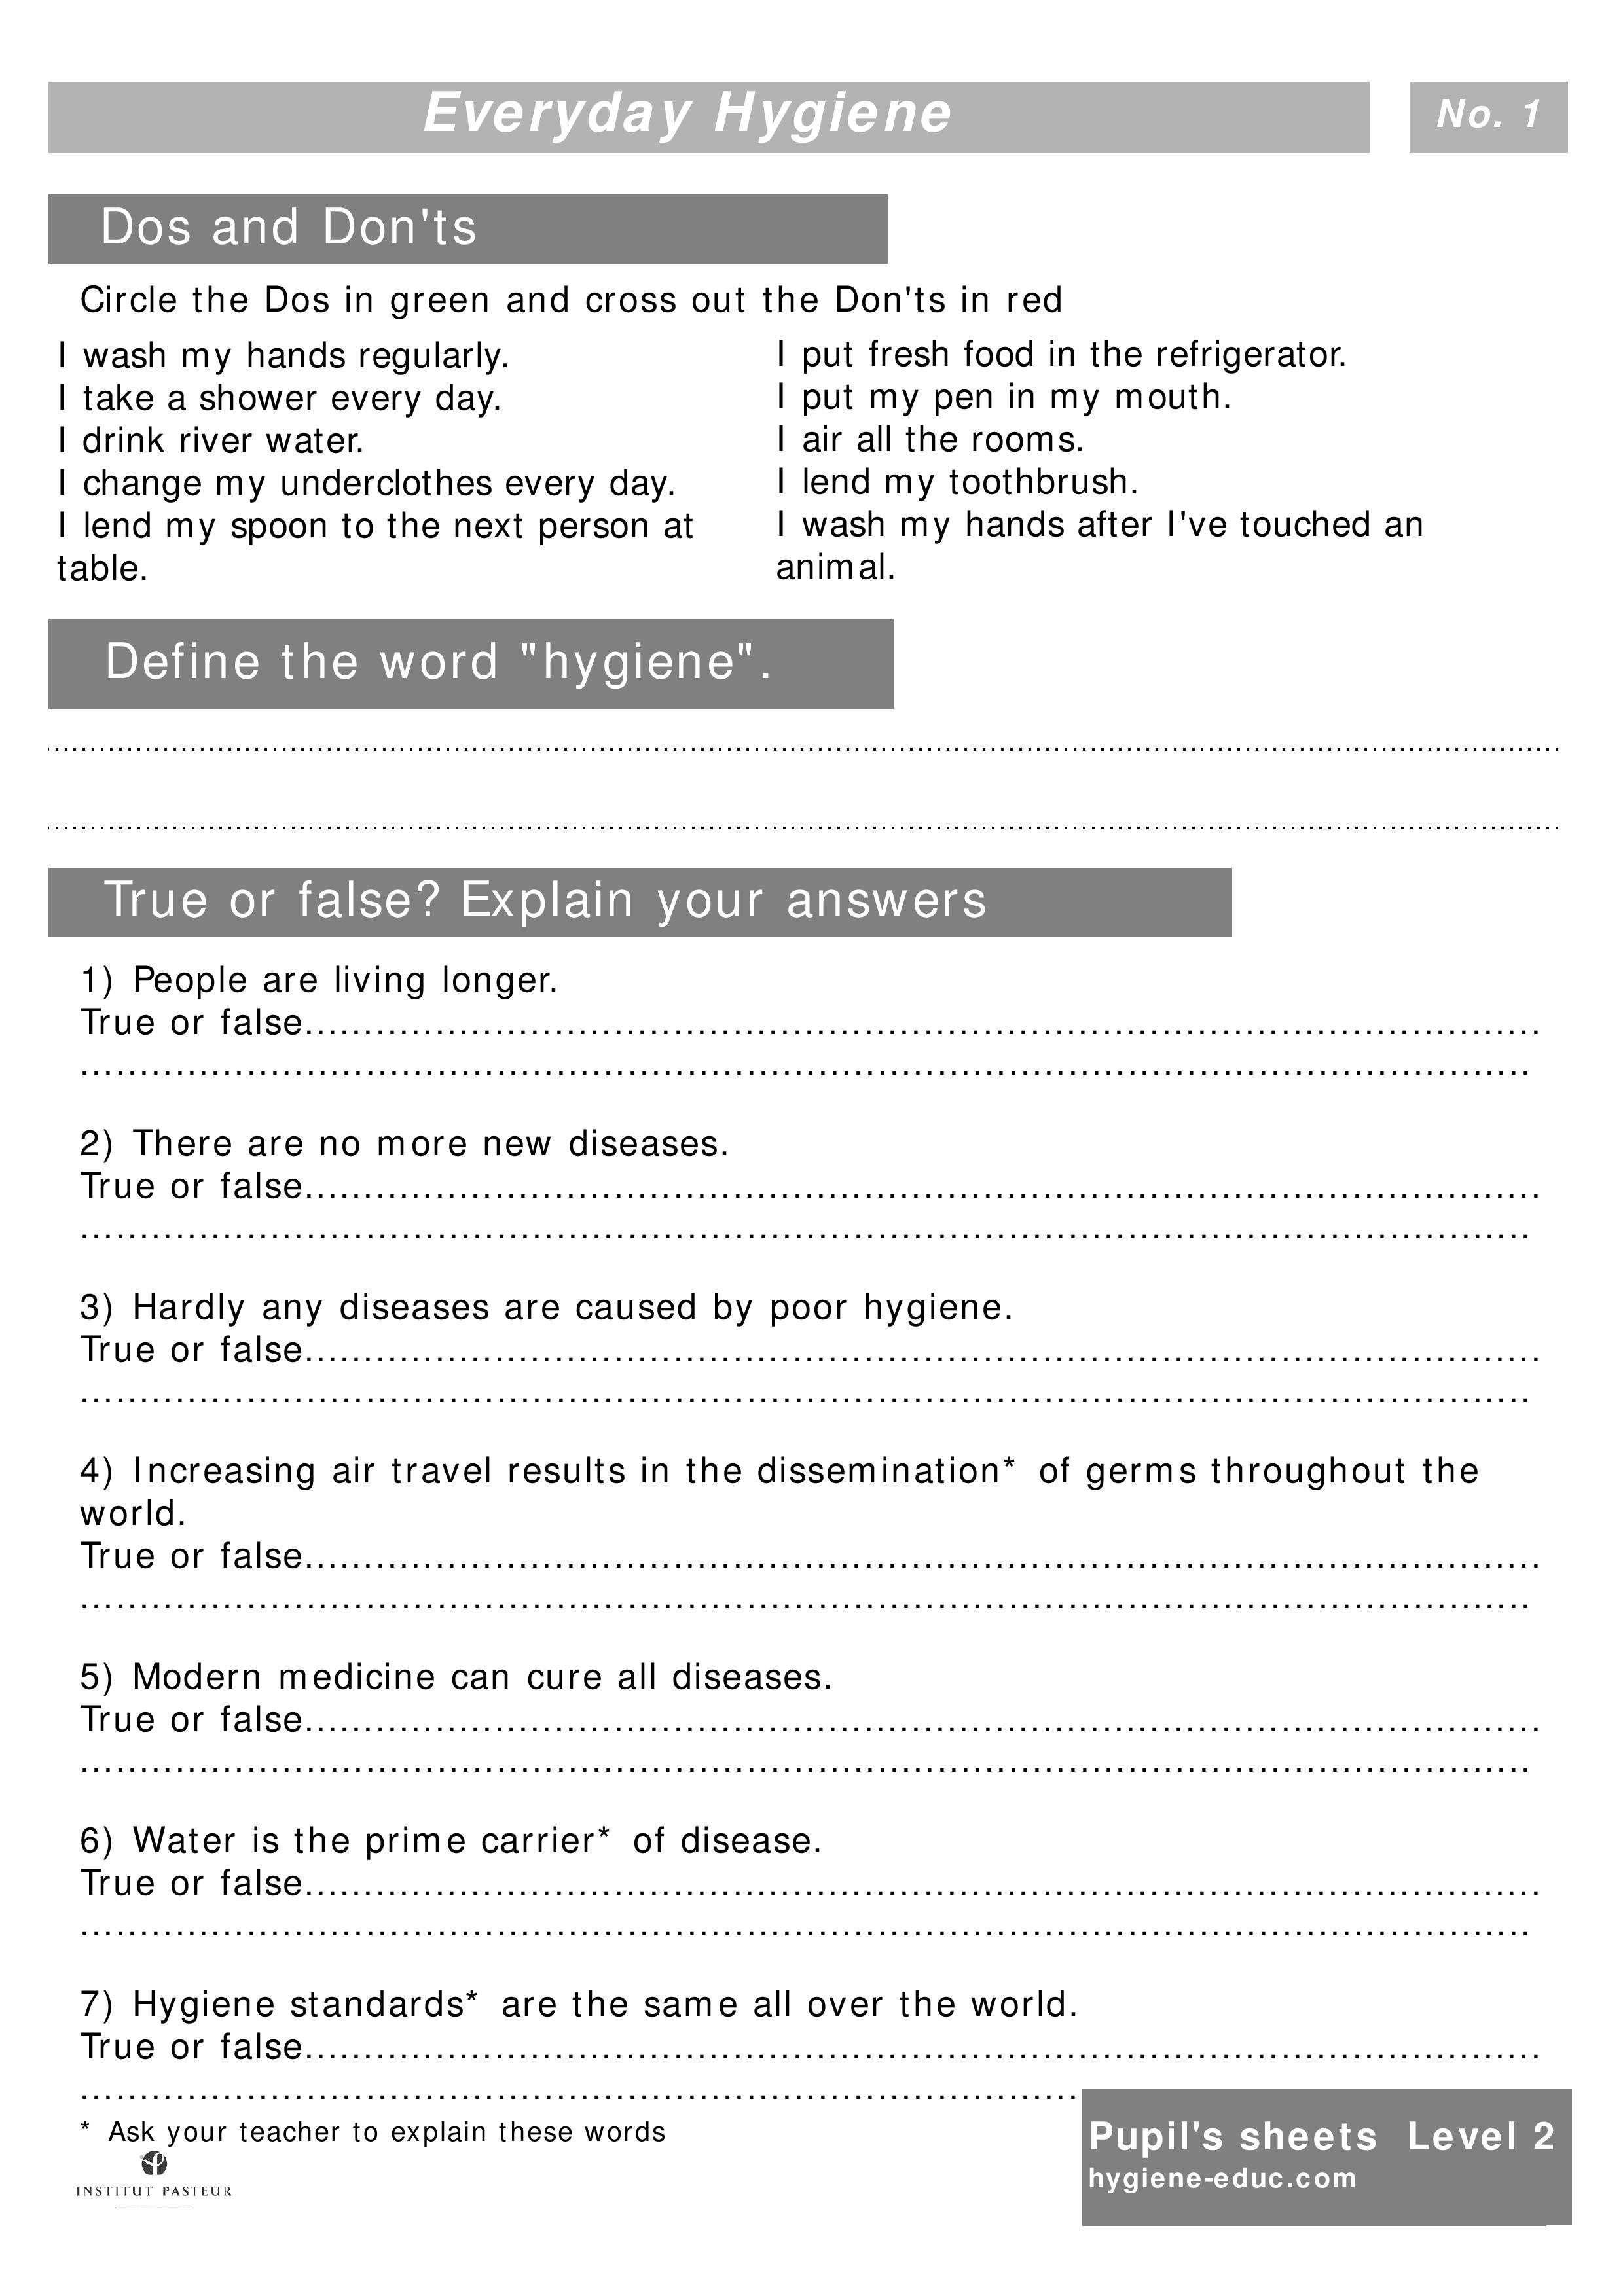 Everyday Hygiene Worksheets For Kids Level 2  Personal Hygiene Along With Personal Hygiene Worksheets Middle School